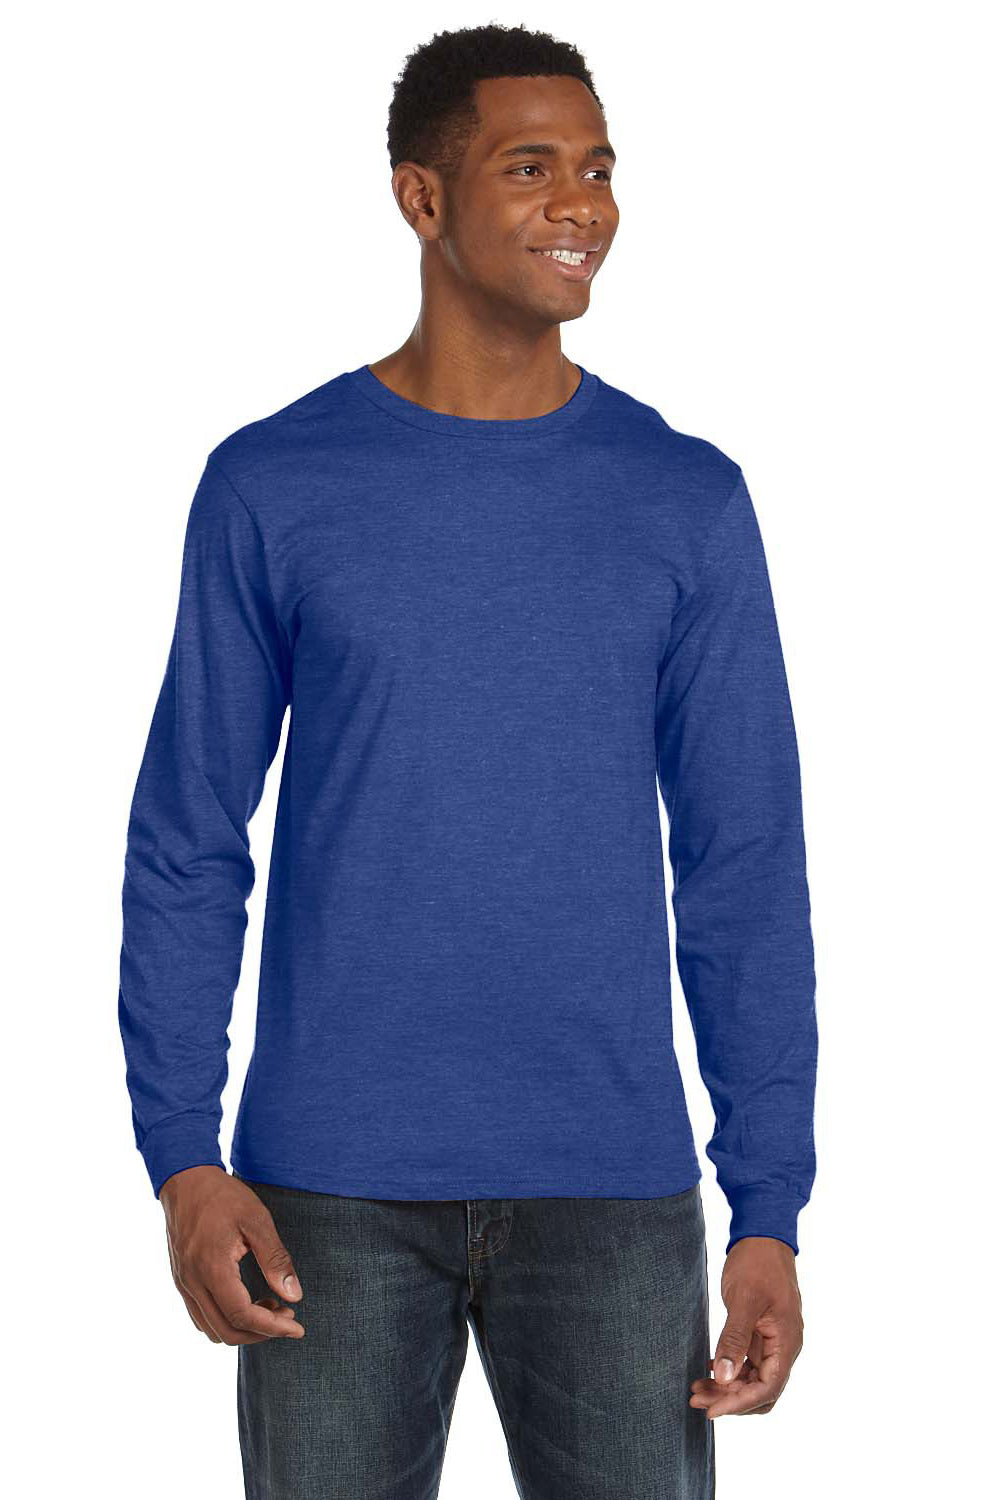 Anvil 949 Mens Long Sleeve Crewneck T-Shirt Heather Blue Front